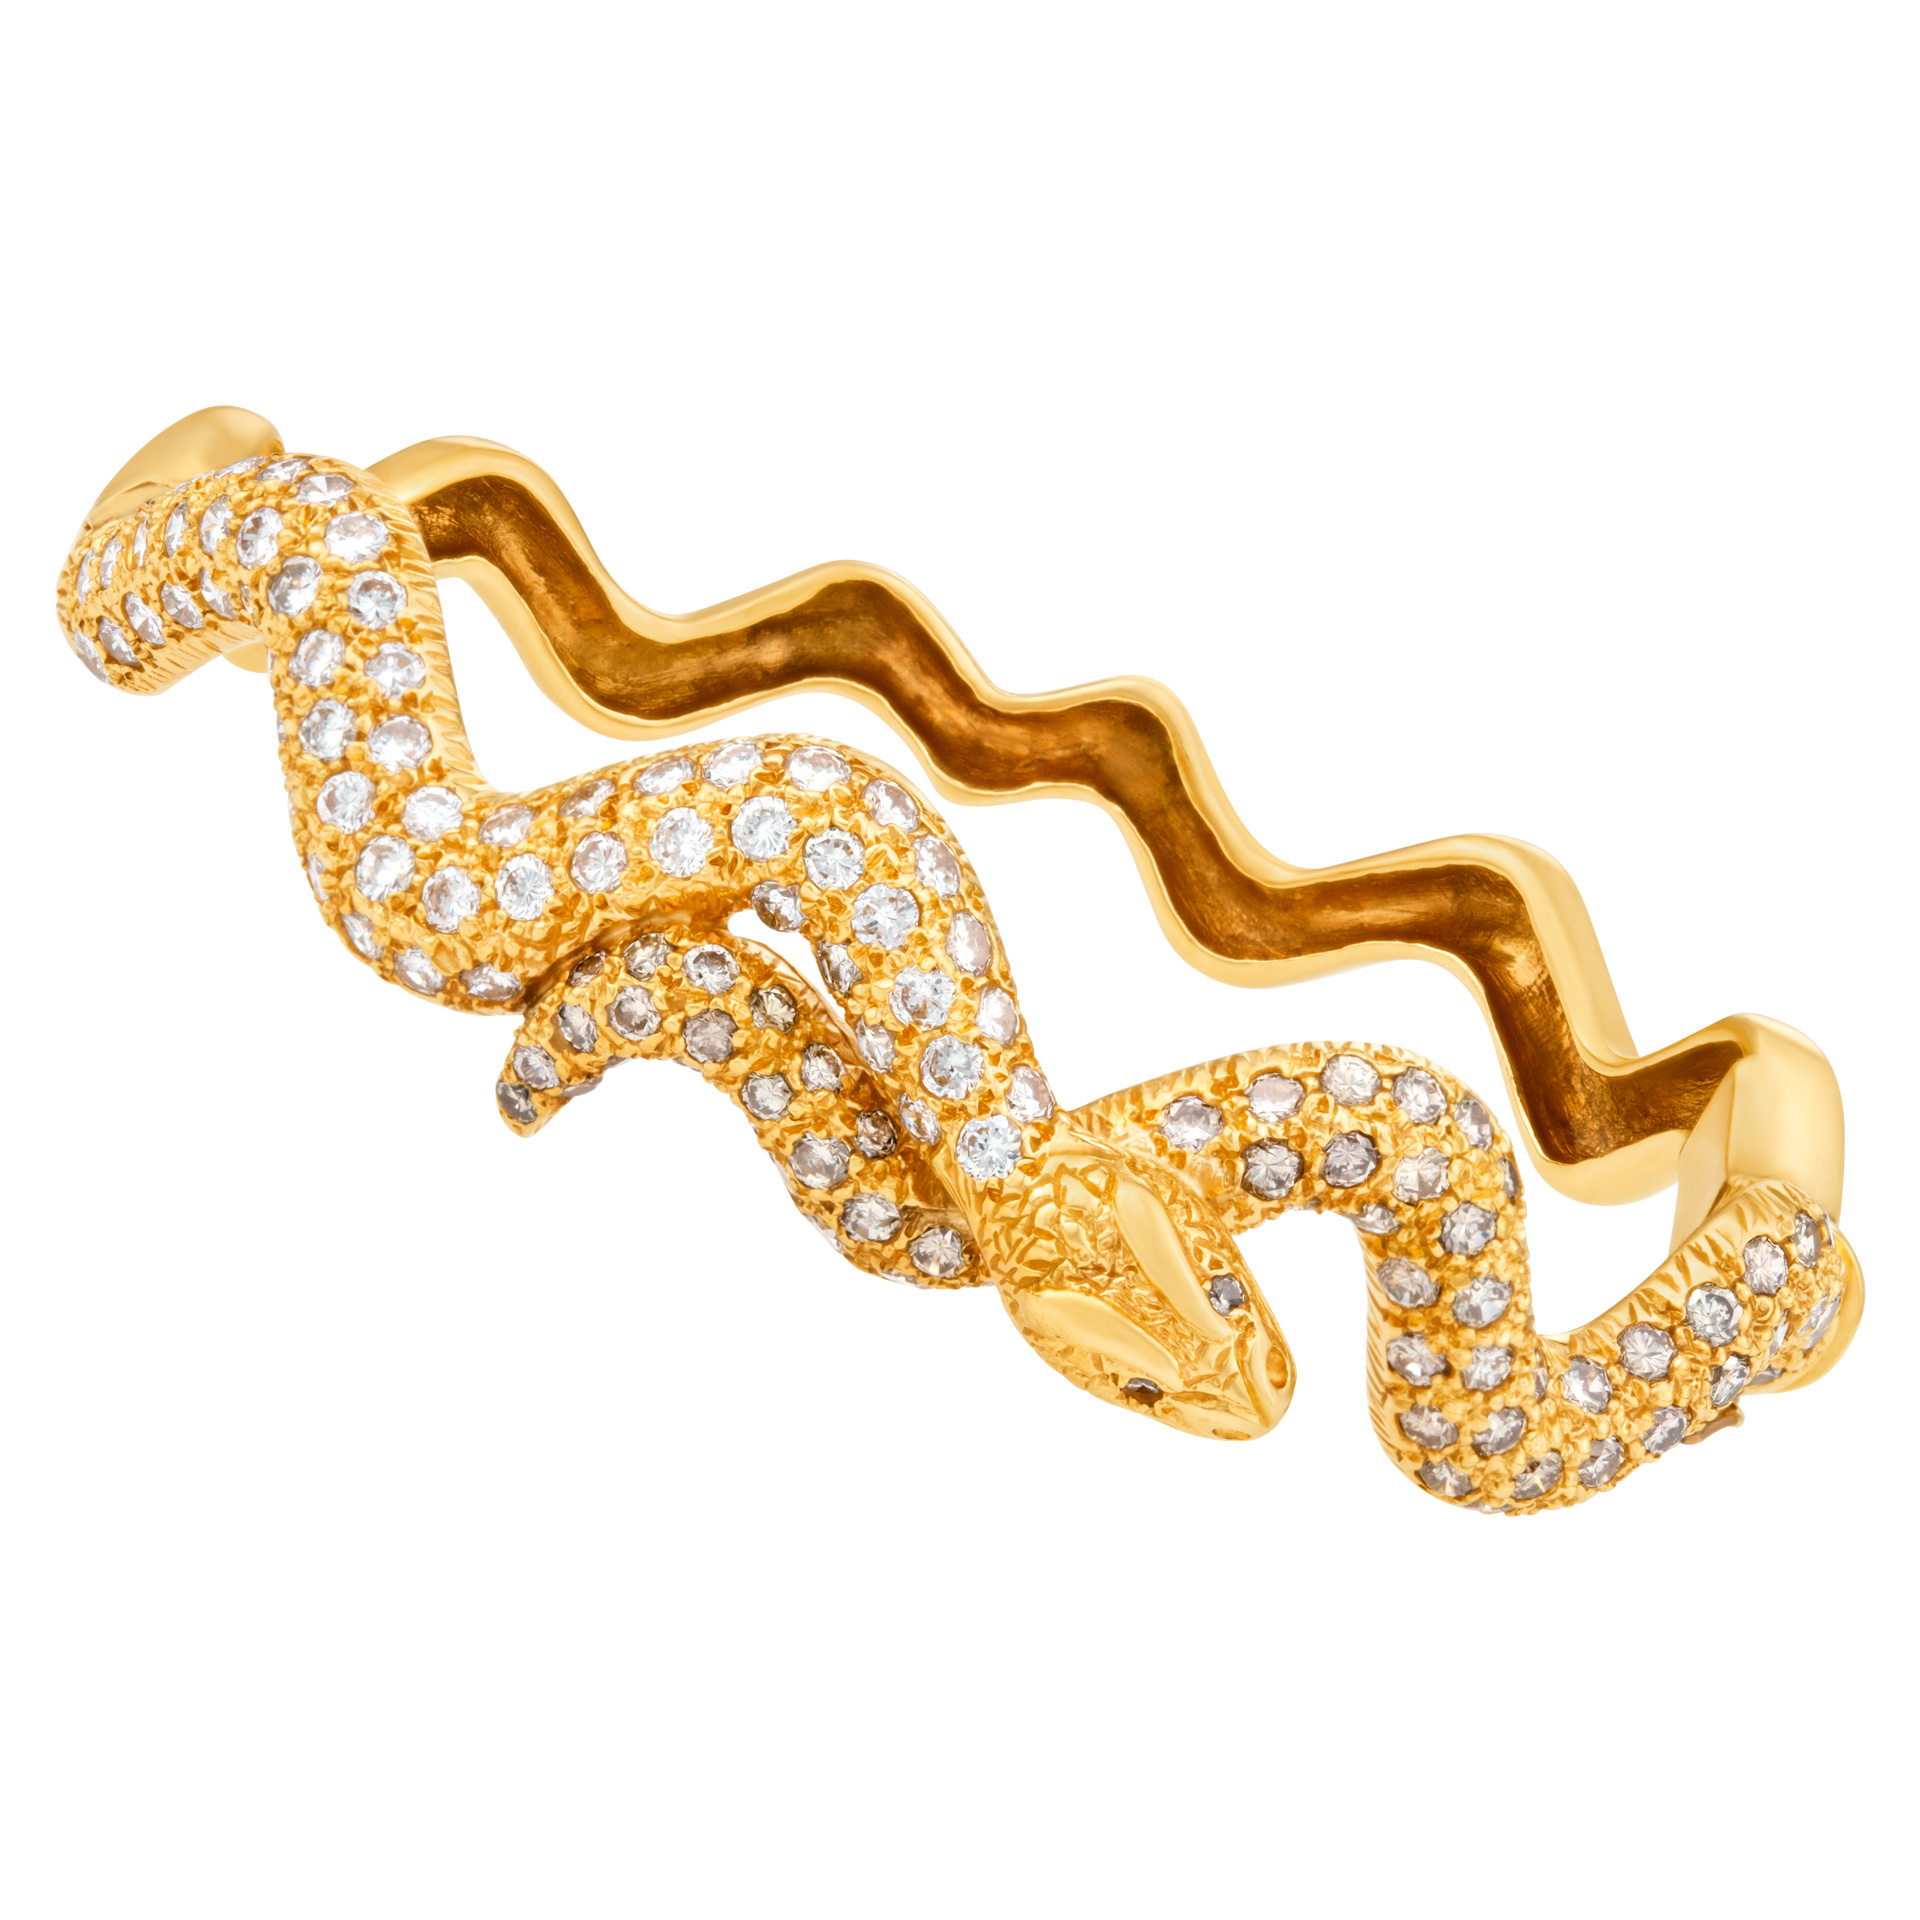 Sazingg 18k serpent bangle with app. 3 carats in diamonds